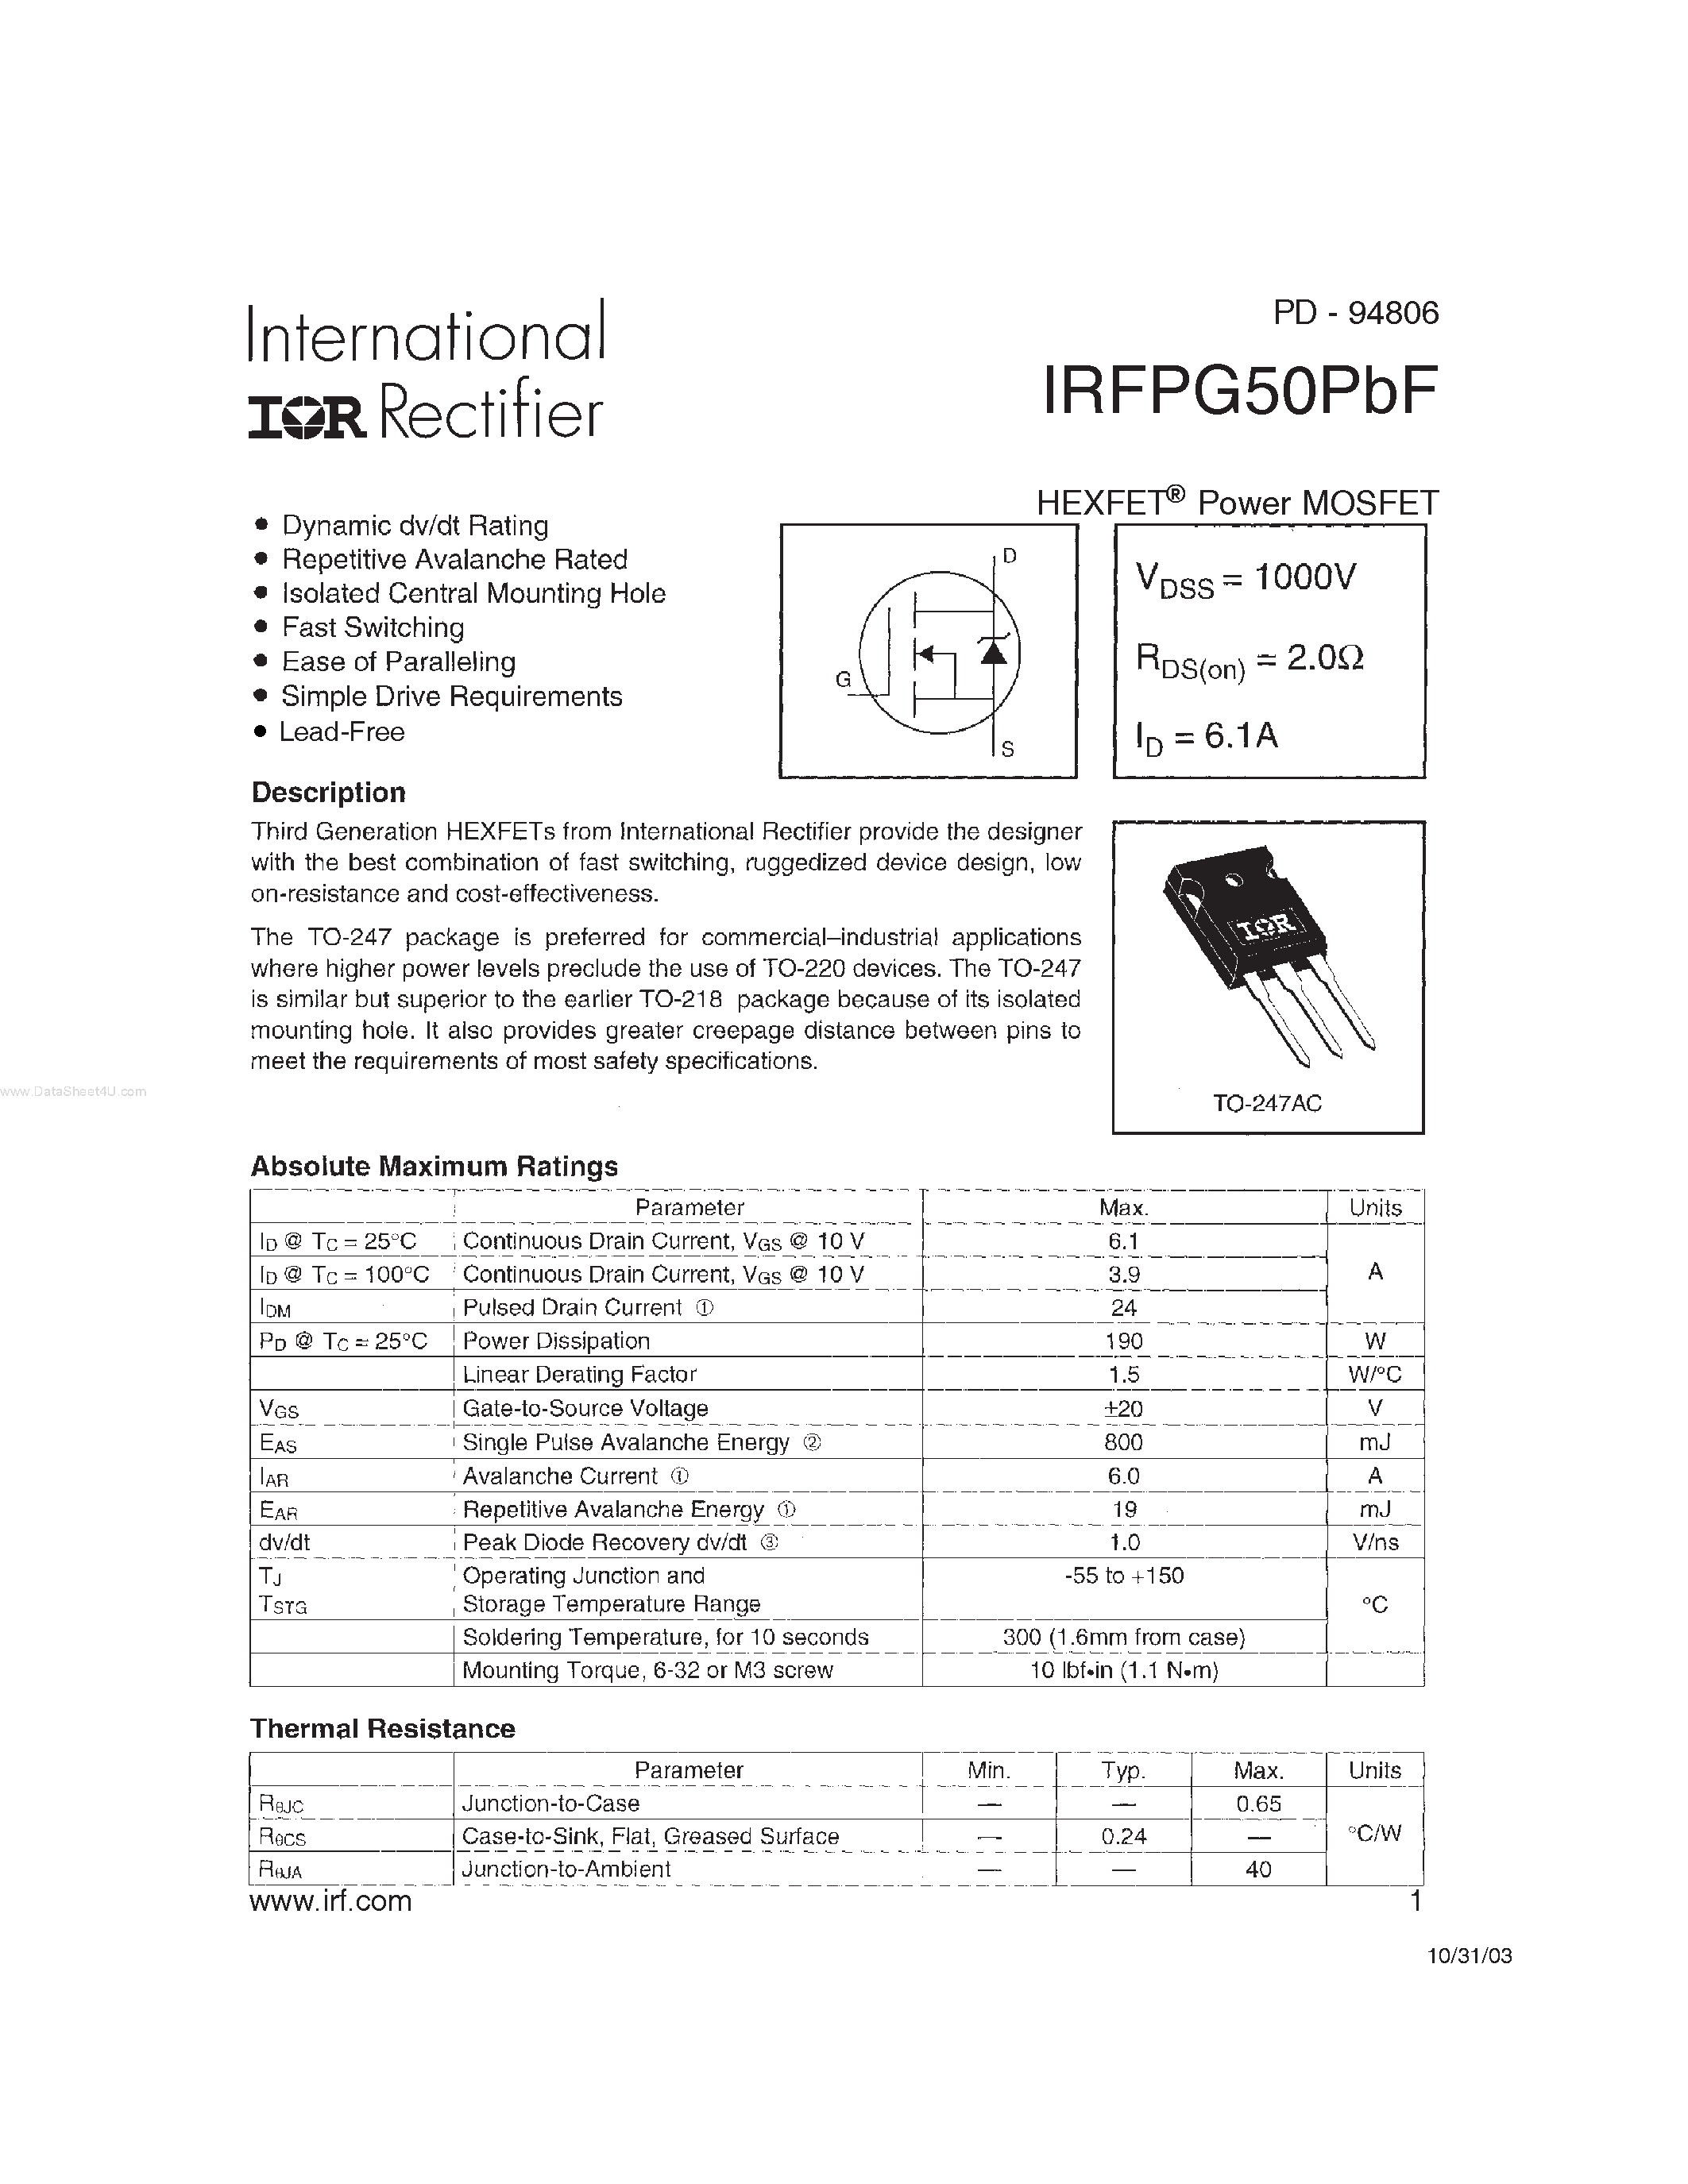 Даташит IRFPG50PBF - HEXFET Power MOSFET страница 1